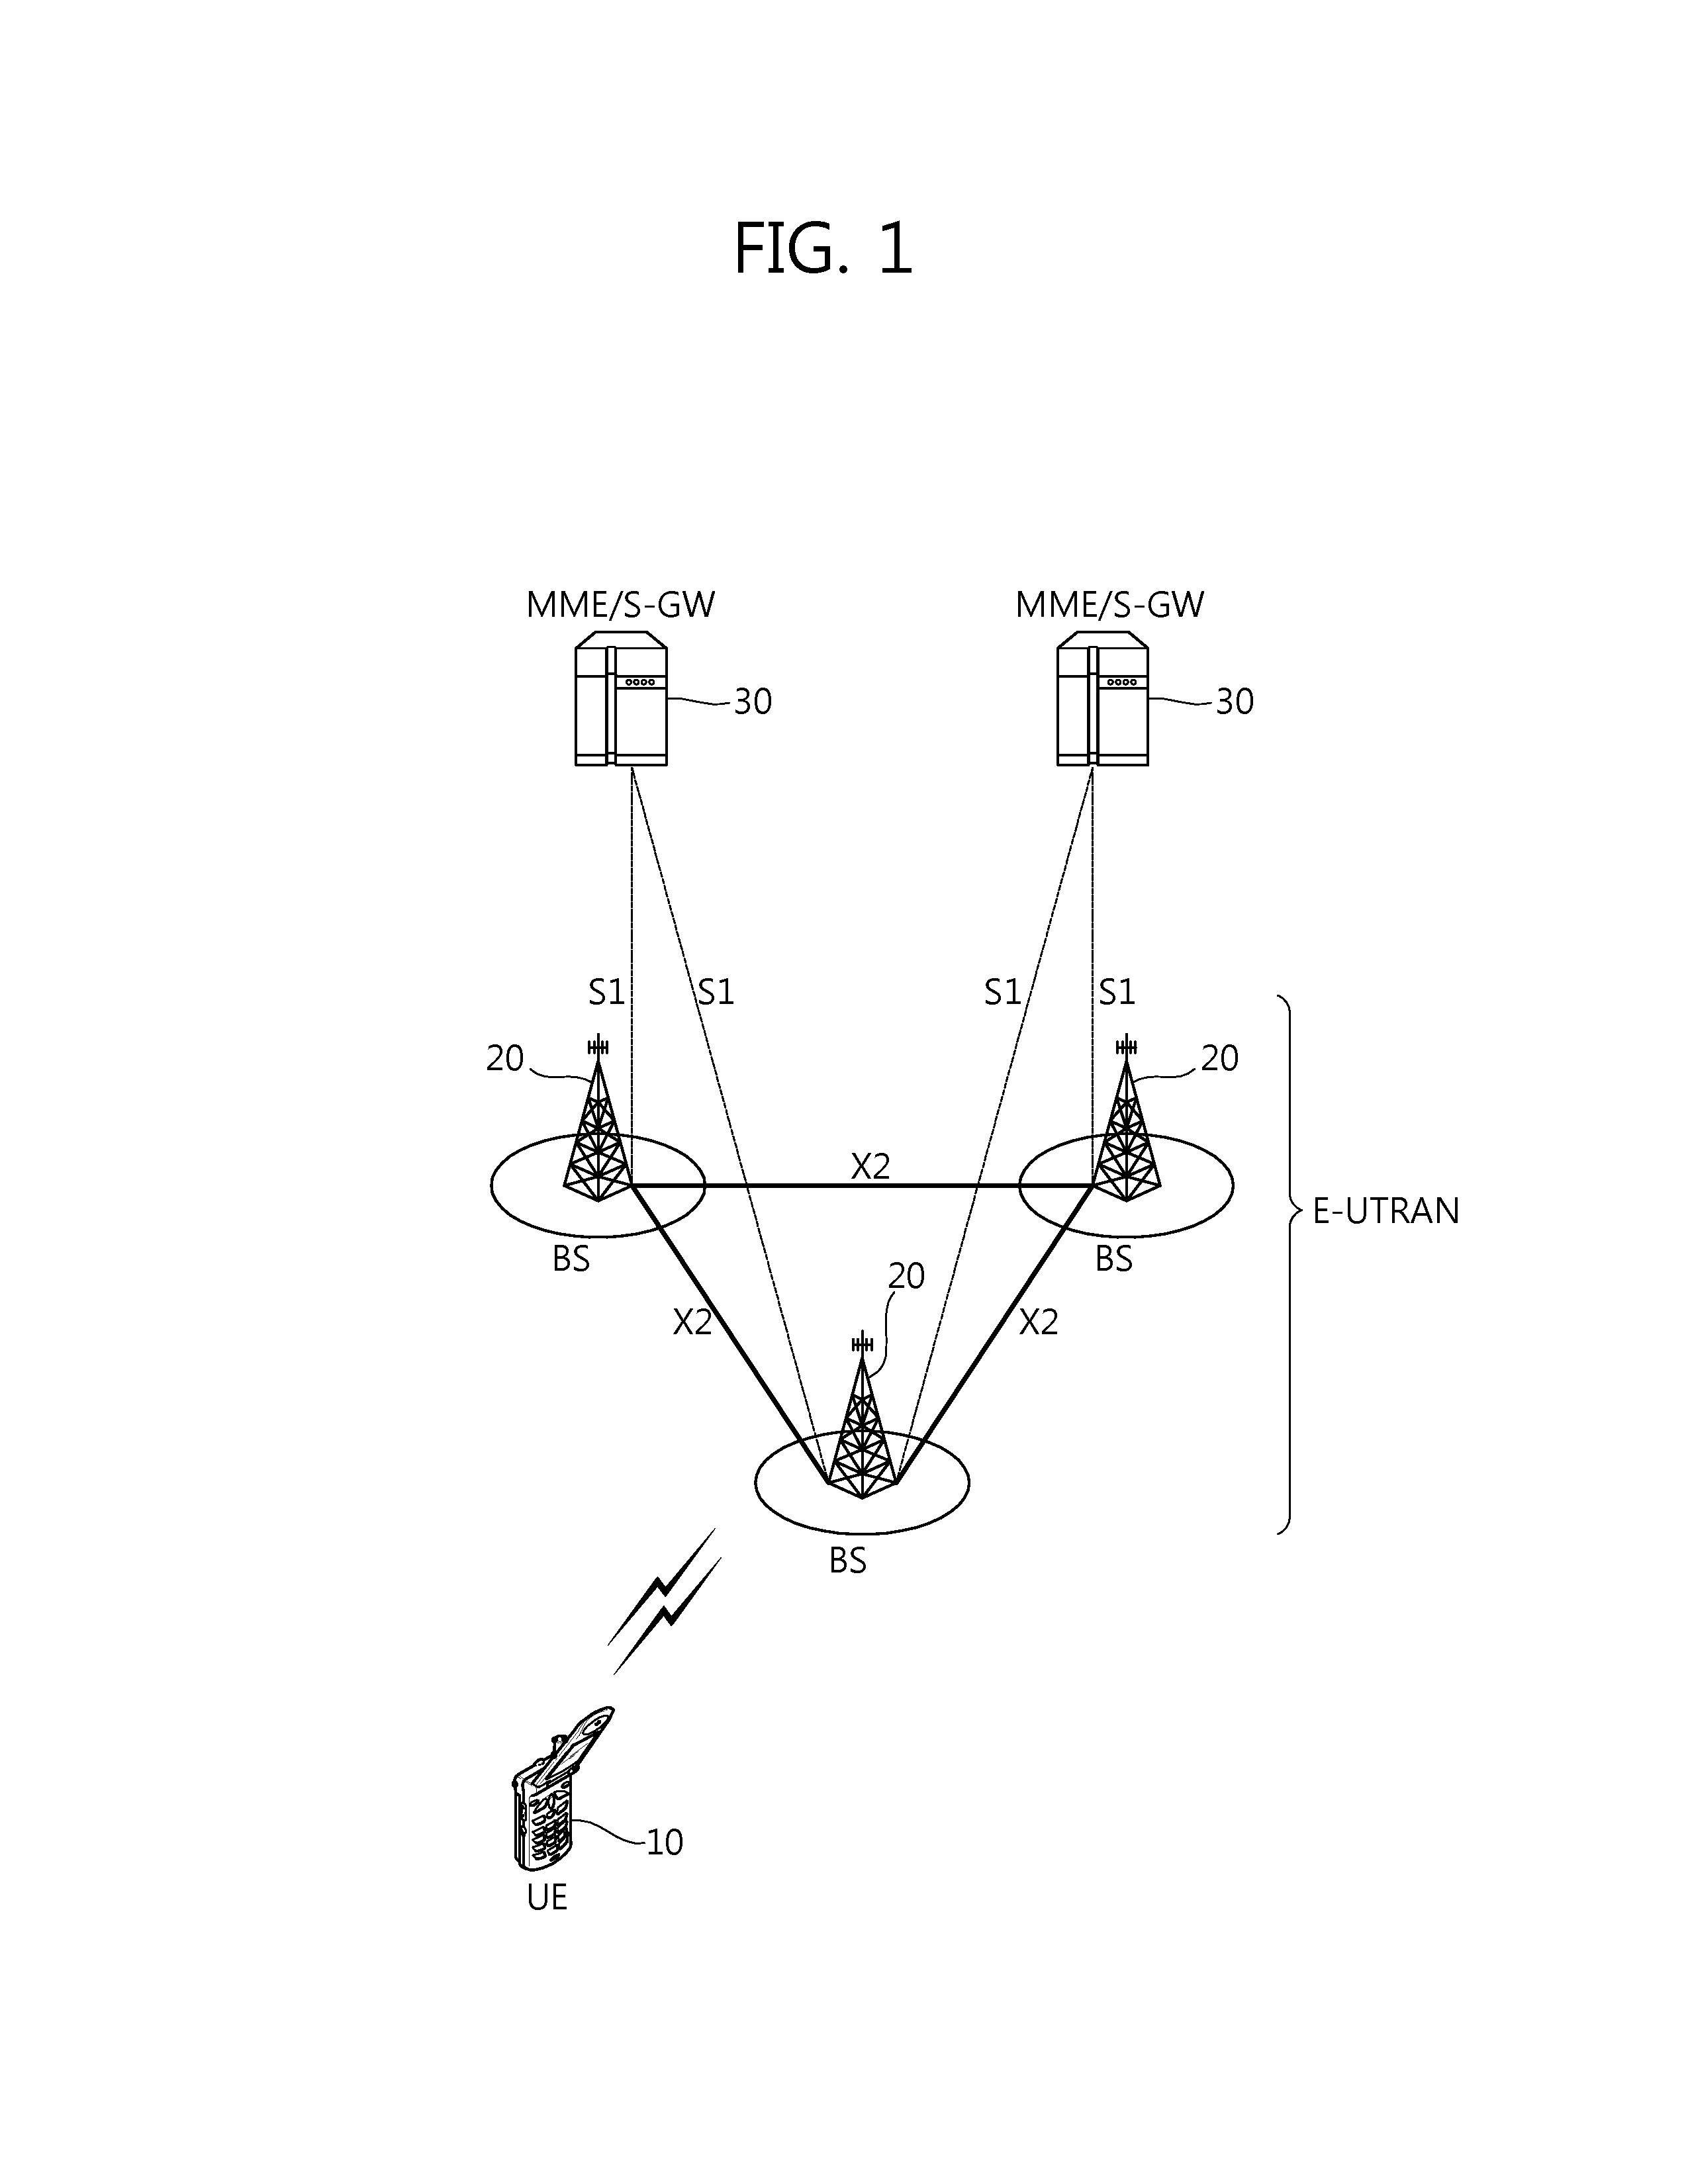 Apparatus and method for transmitting data using multiple antennas and beamforming